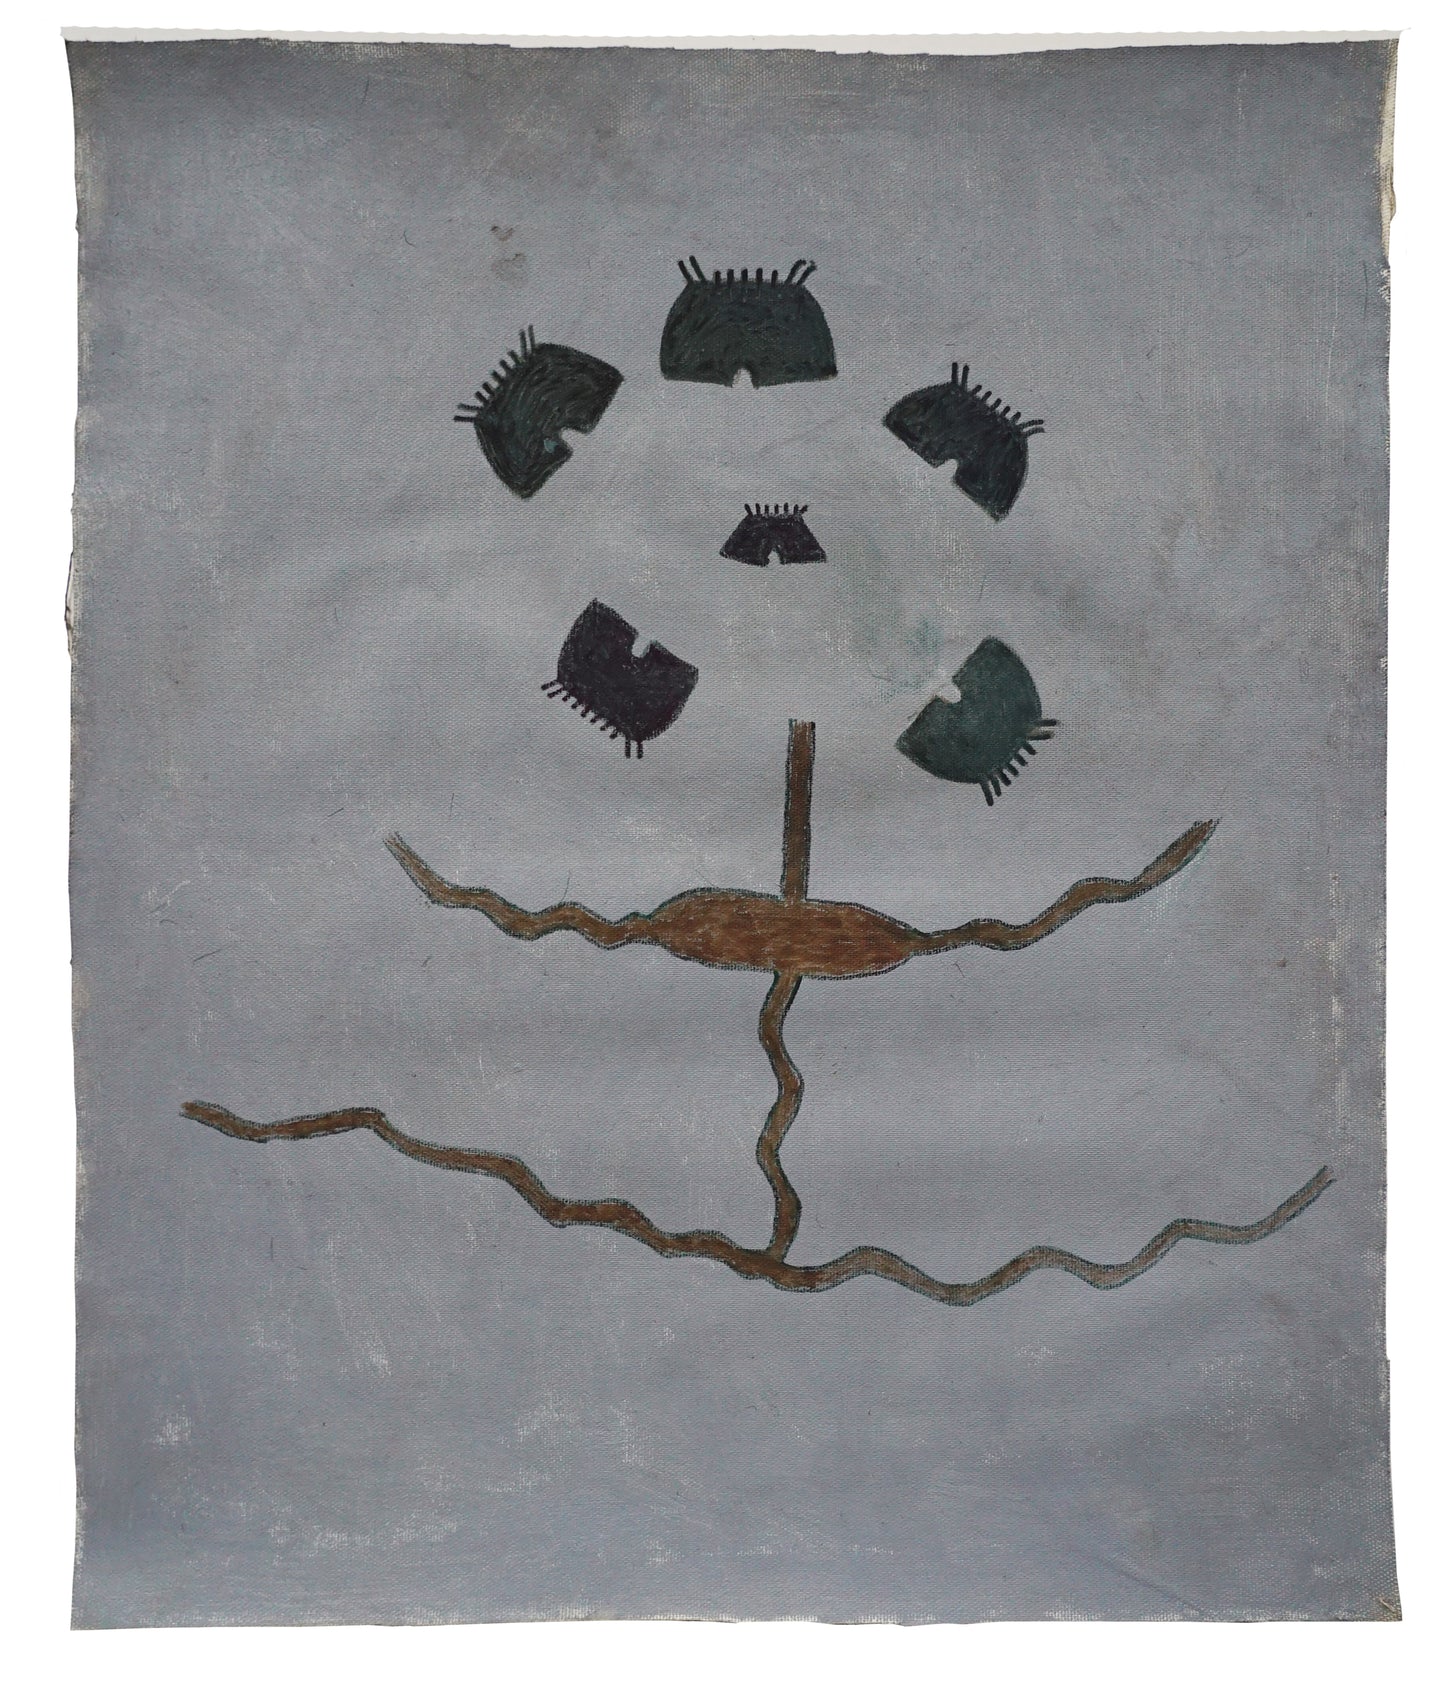 Selection of paintings by Kamo Waura, of the Upper Xingu territory